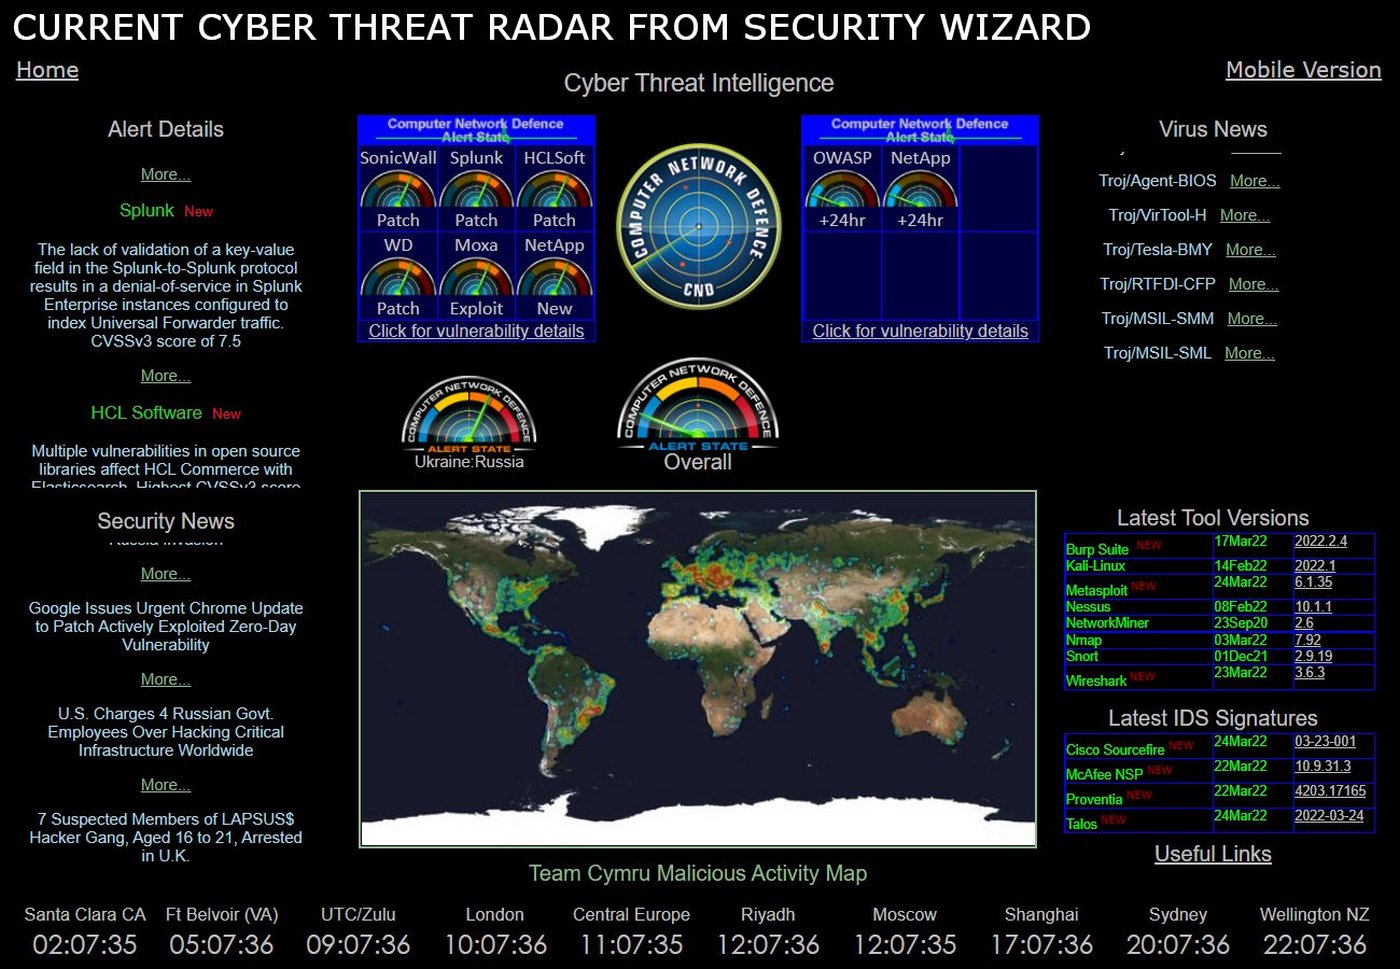 Cyber Threat Image